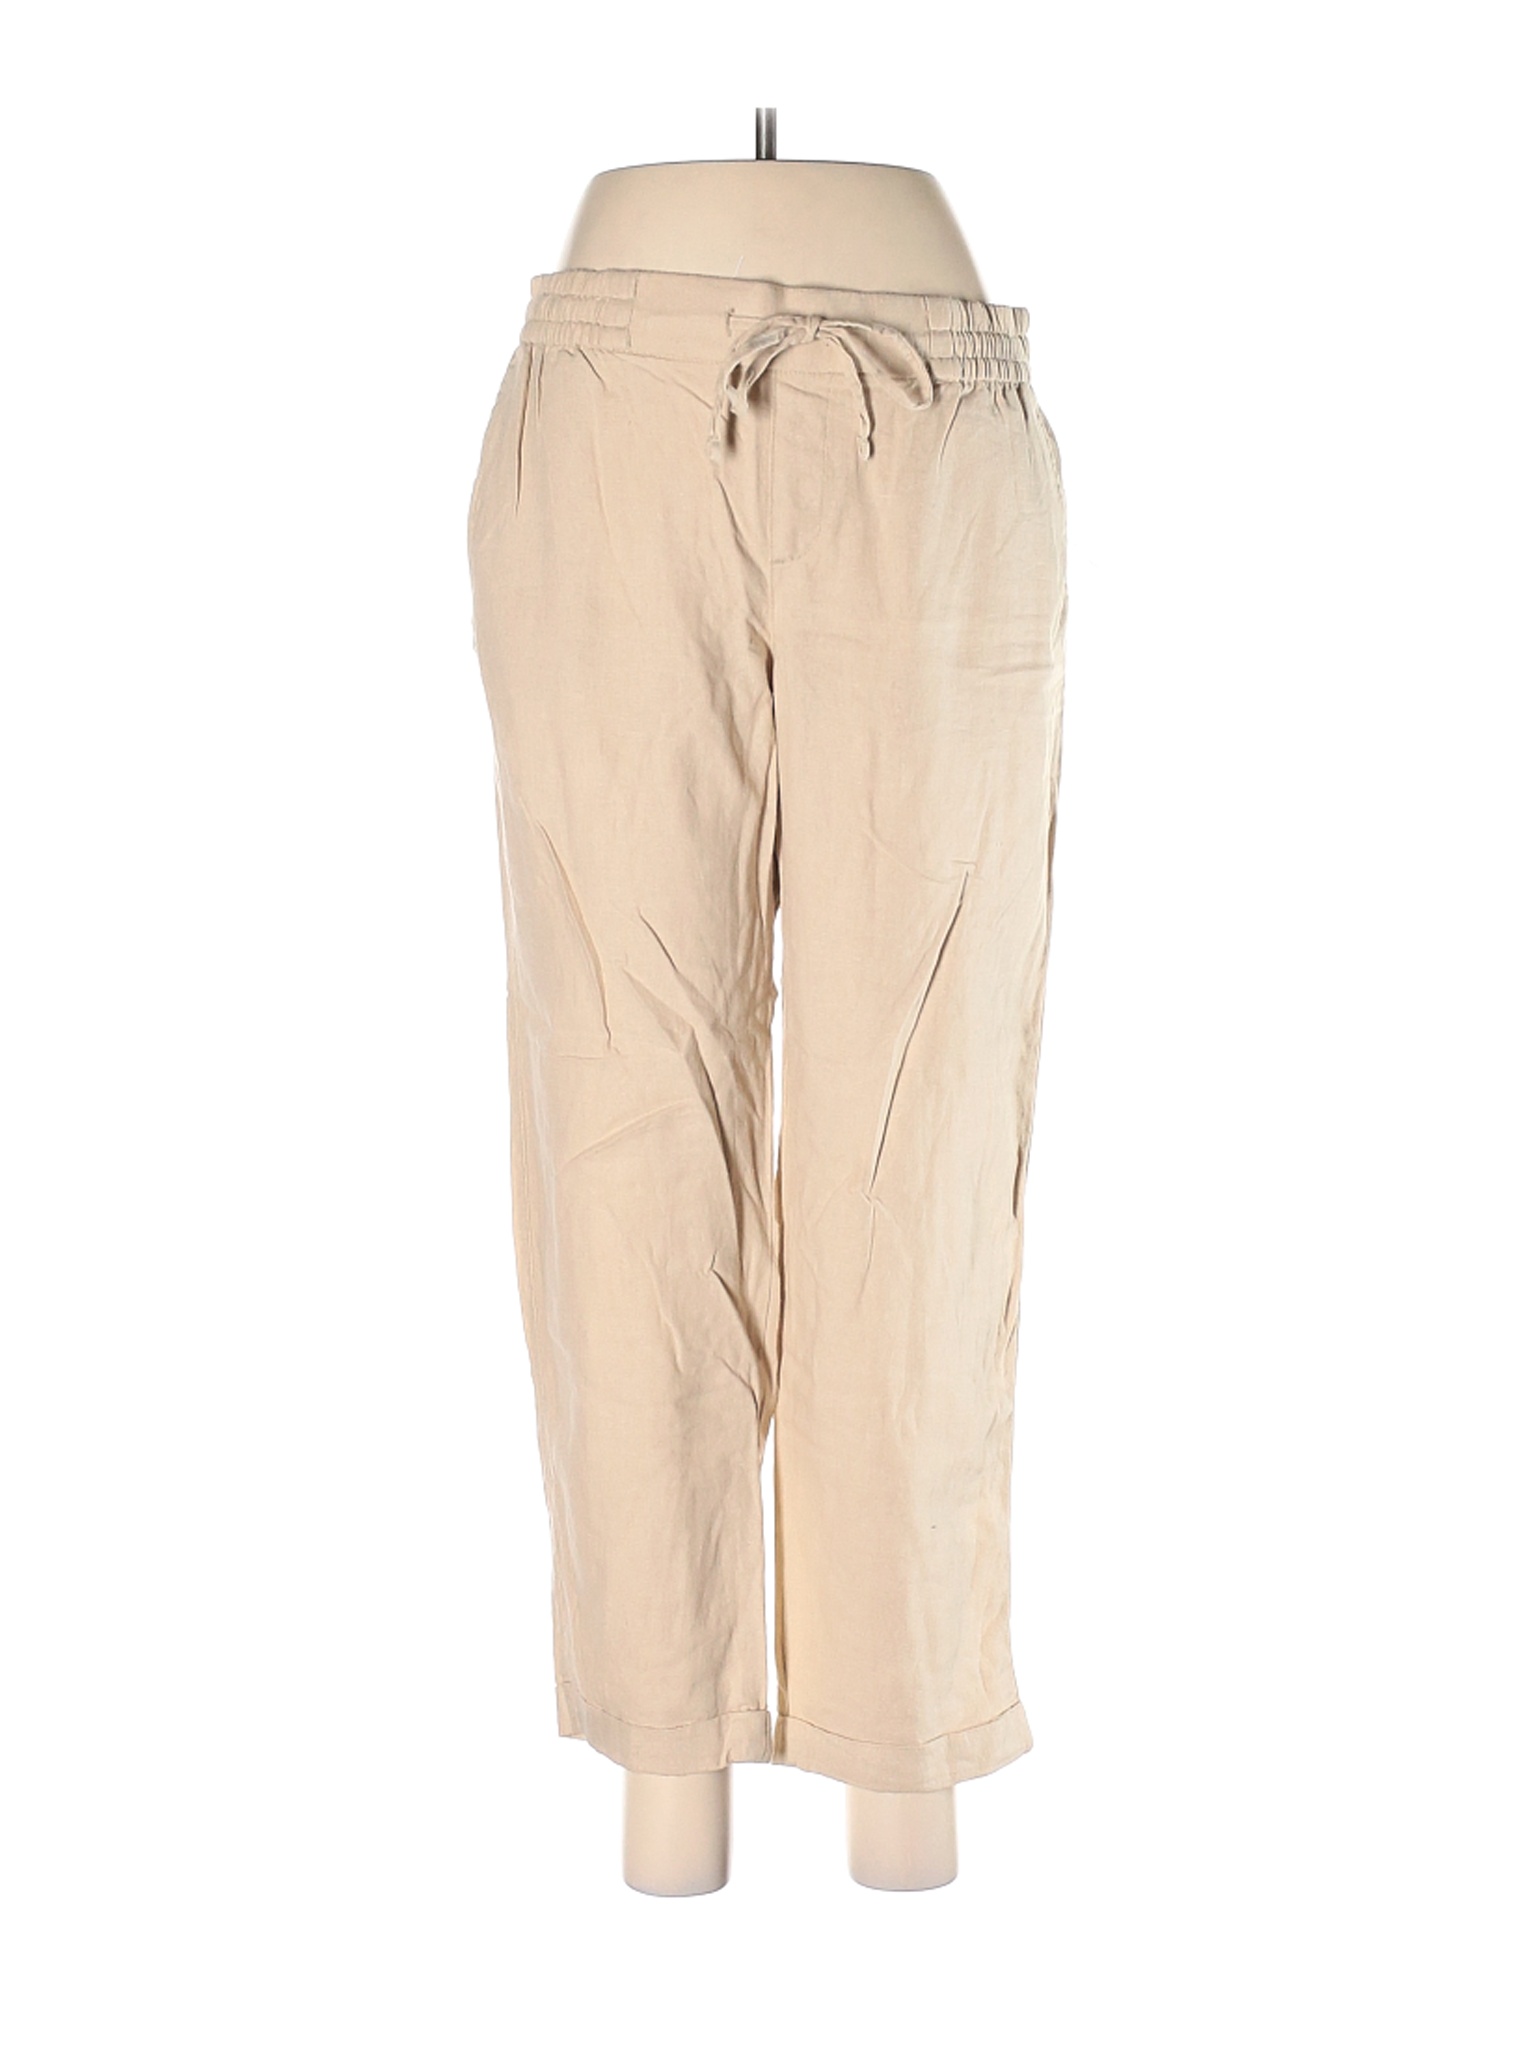 NWT Old Navy Women Brown Linen Pants M | eBay